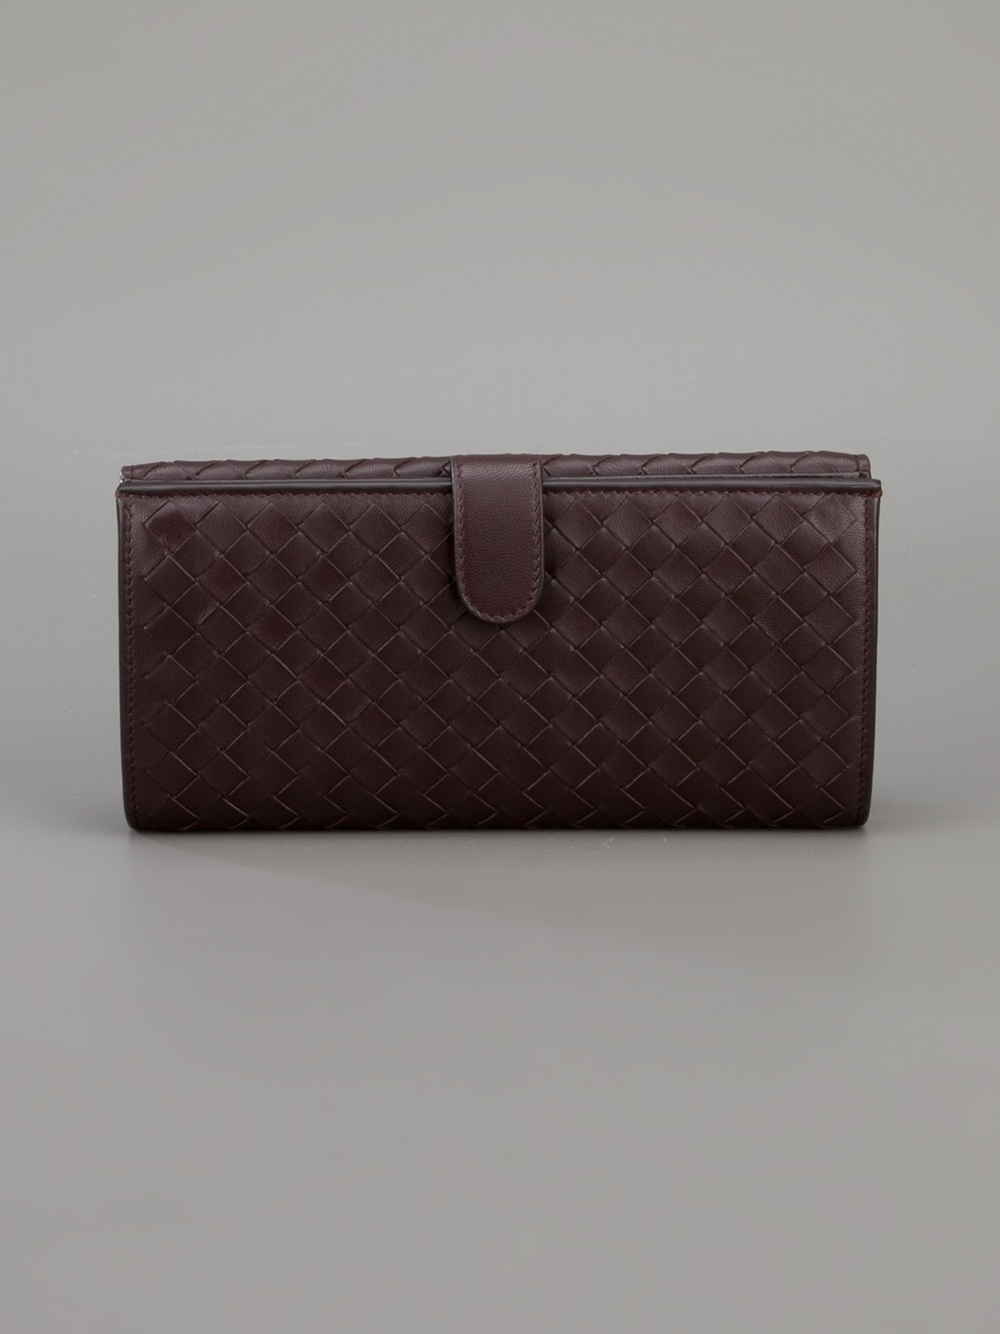 Lyst - Bottega Veneta Woven Leather Trifold Wallet in Brown